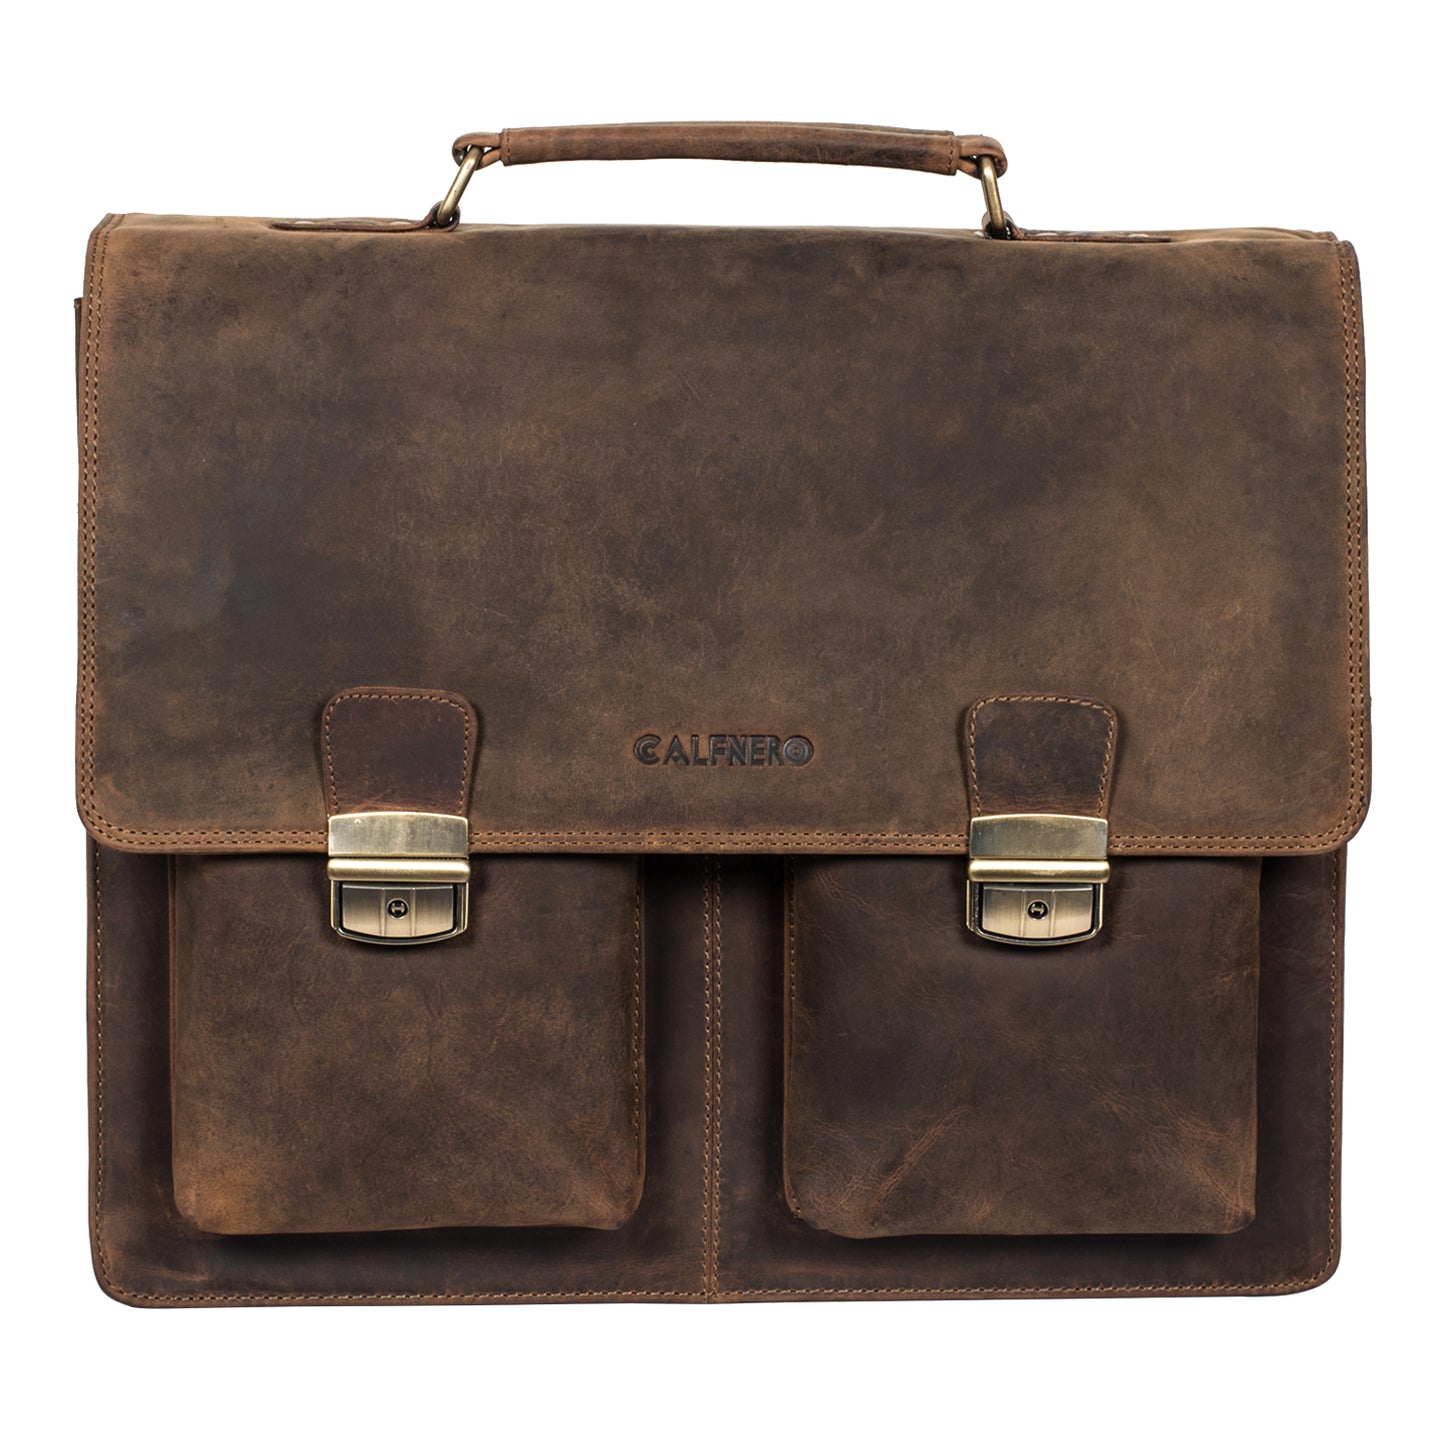 Calfnero Genuine Leather Men's Messenger Bag (326-Hunter)